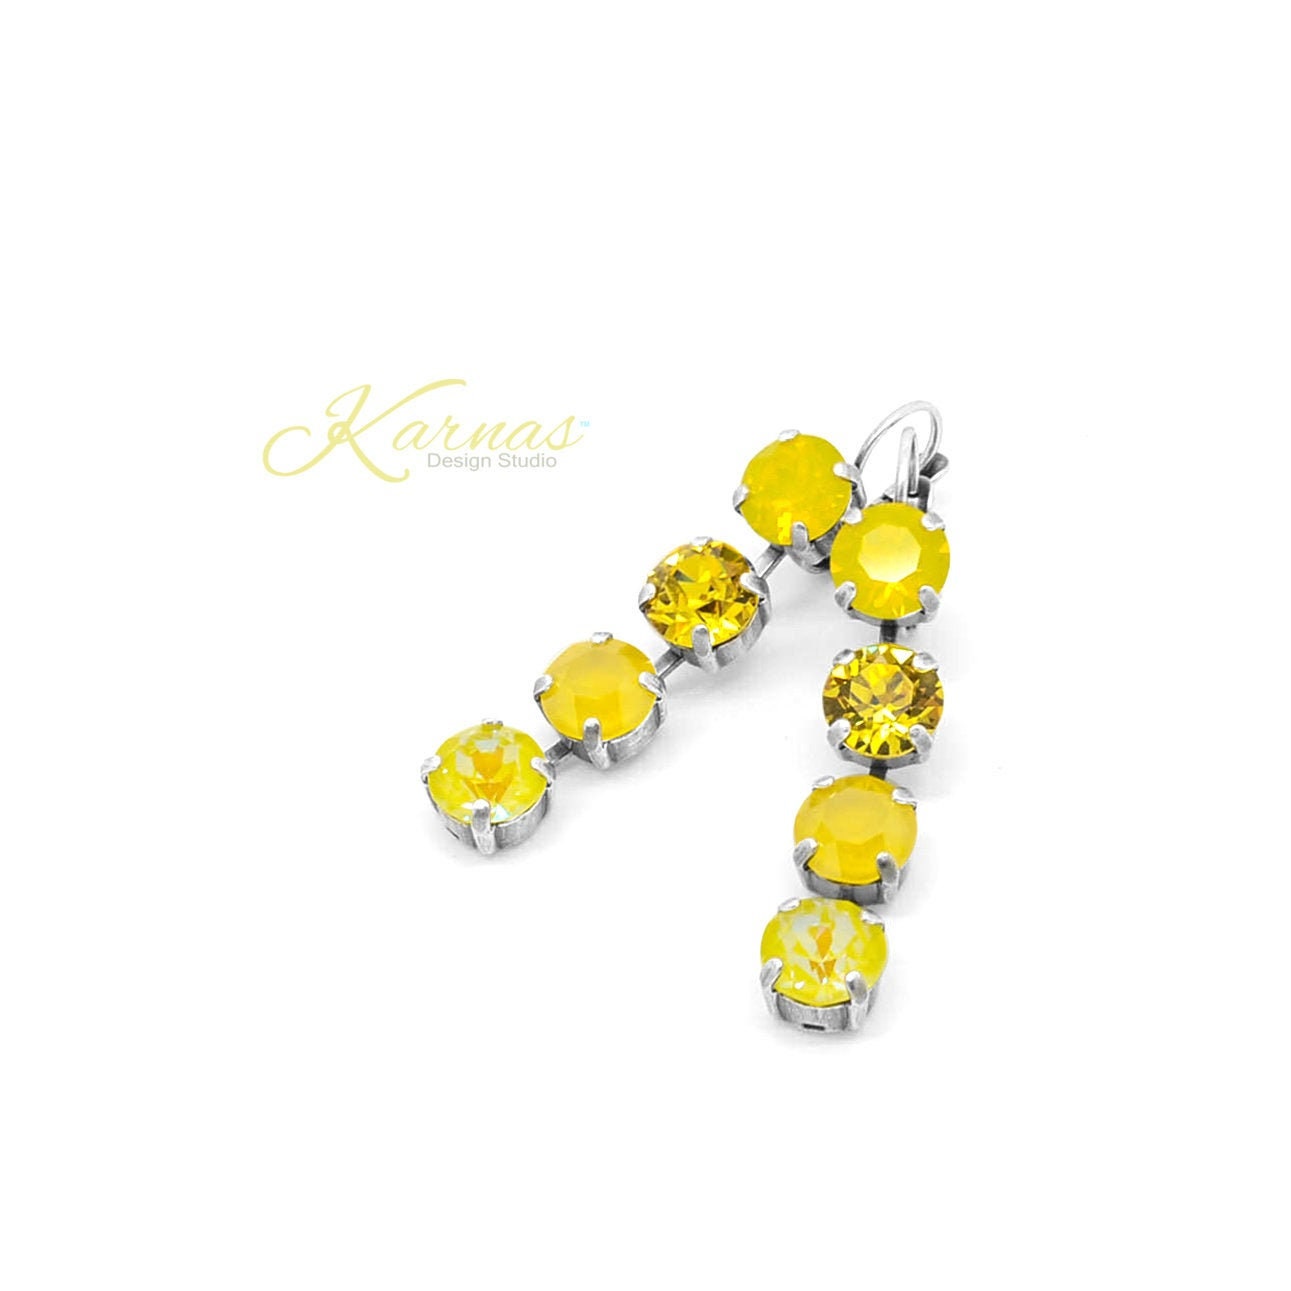 I'm Smiling 4-Stone 8mm Drop Leverback Earrings K.d.s. Premium Crystal Choose Your Finish Karnas Design Studio Free Shipping